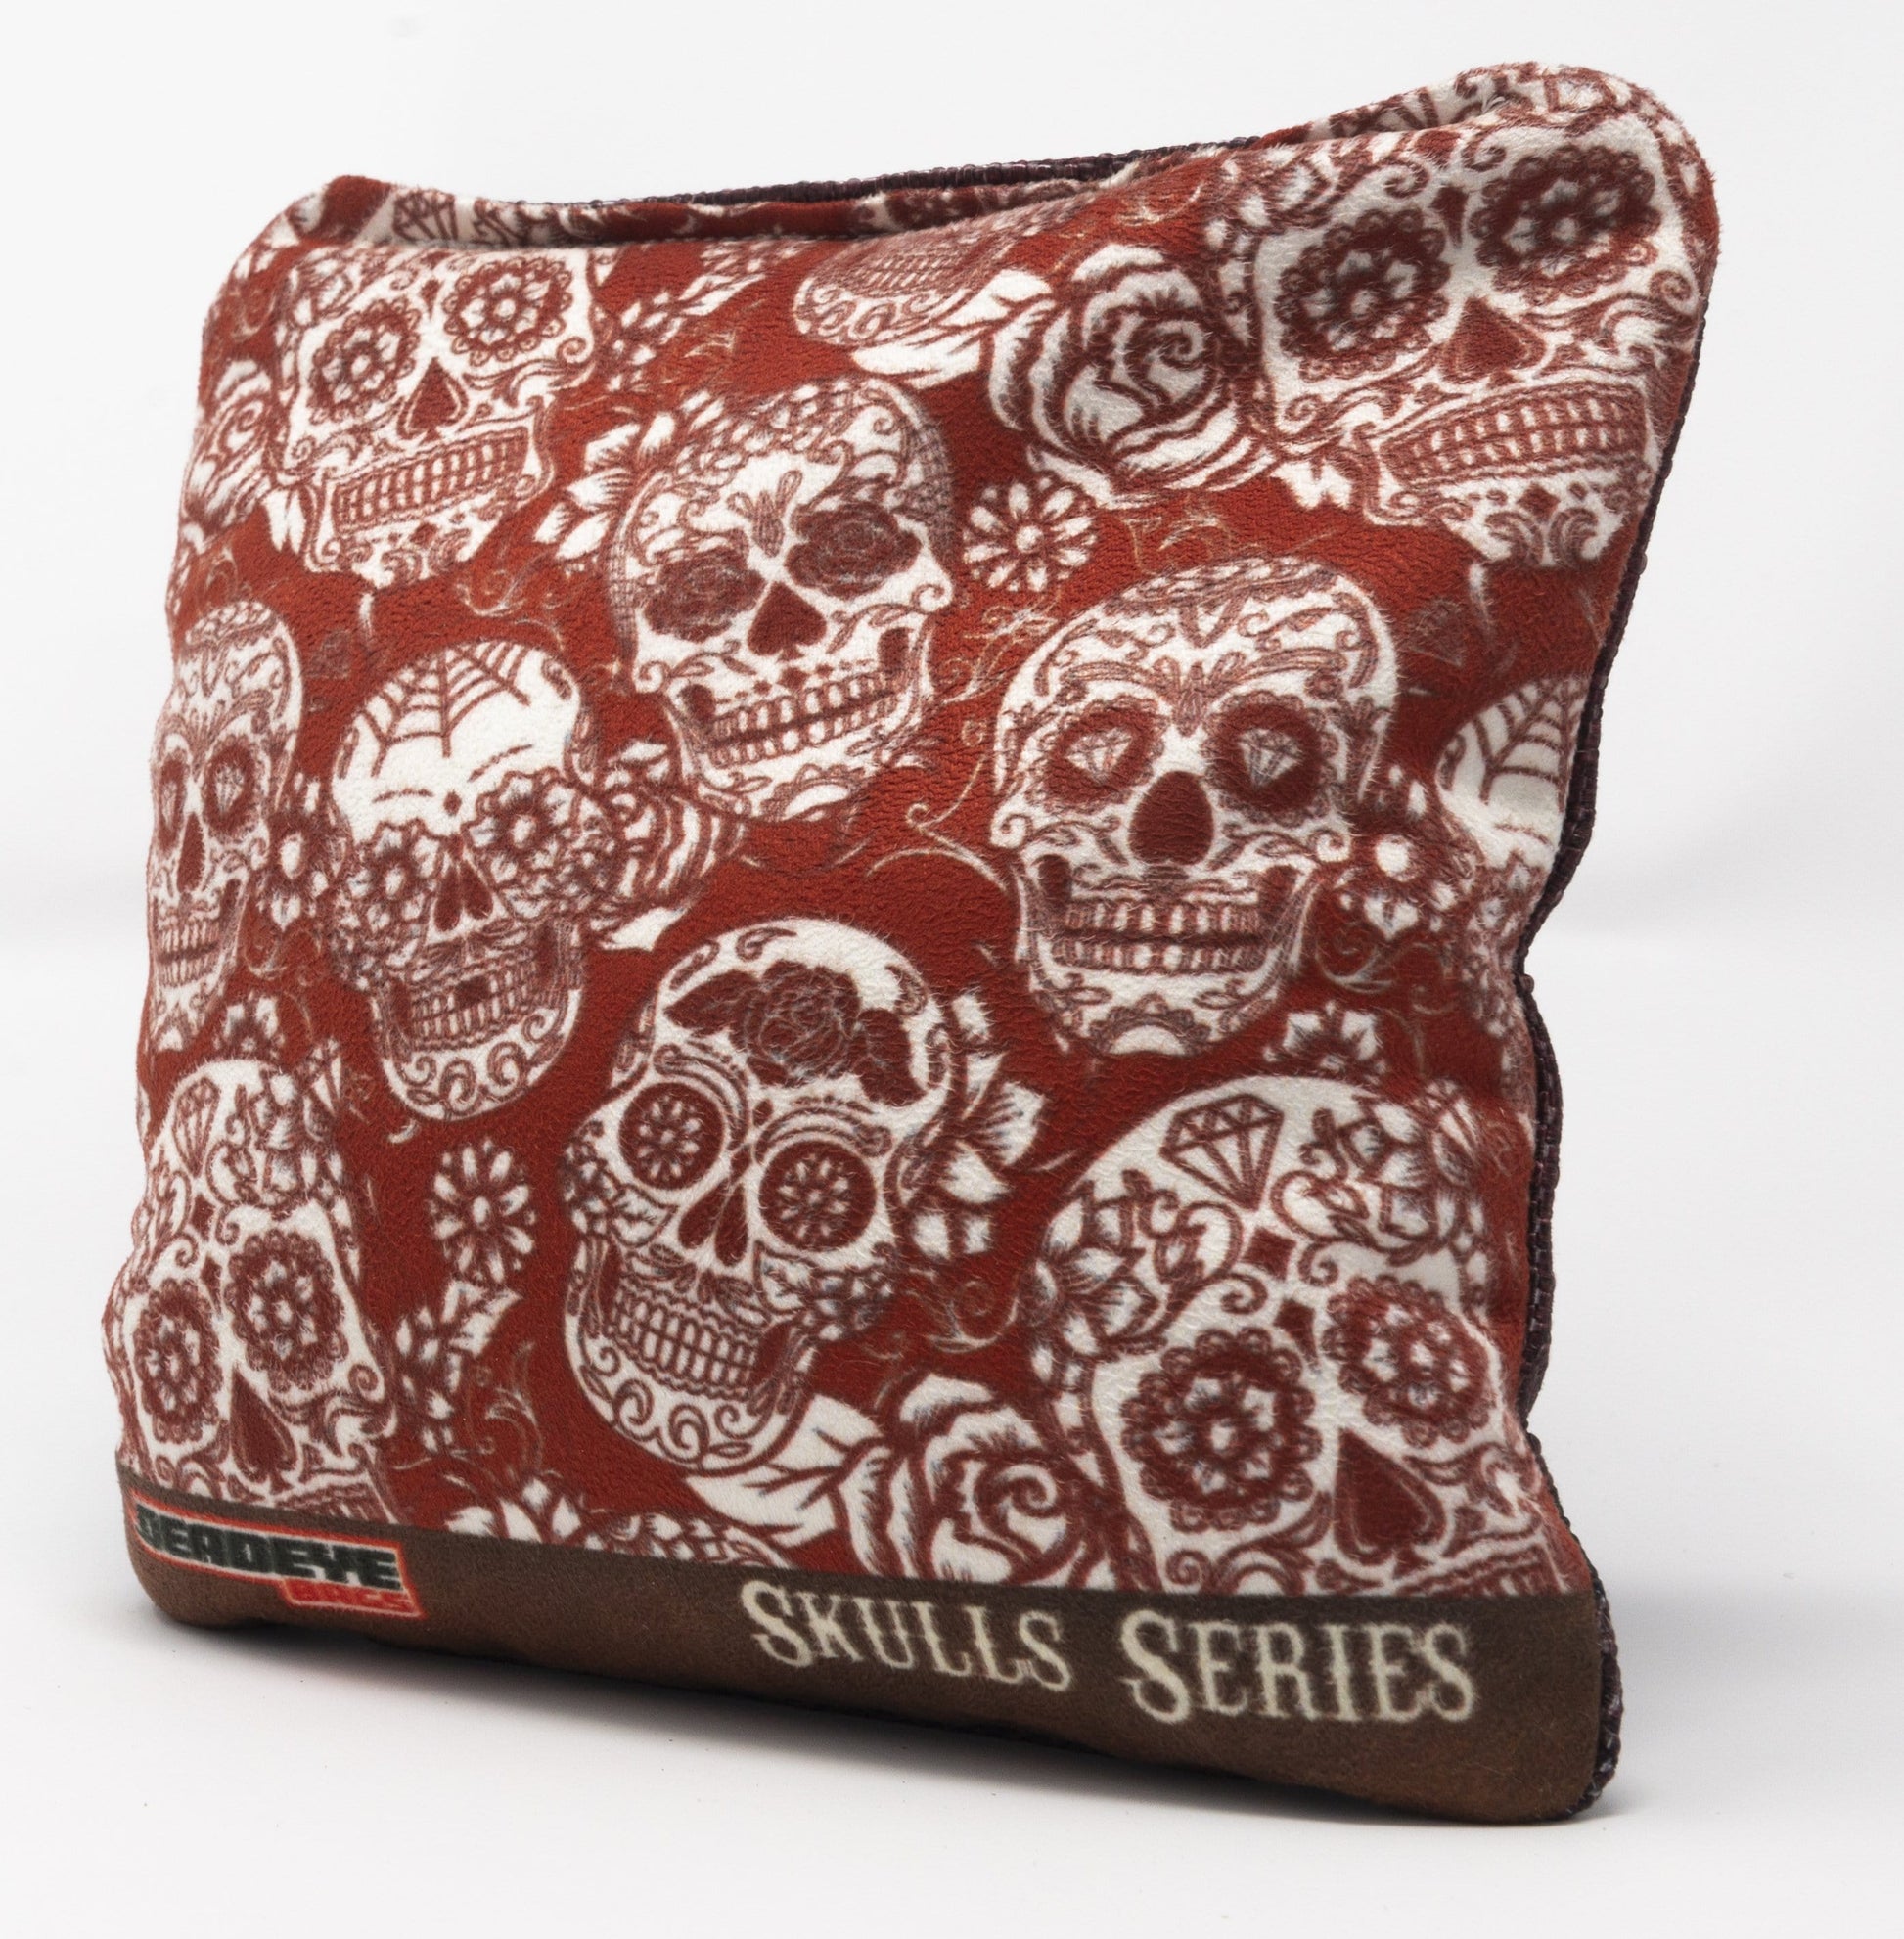 Pro Cornhole Bags - Detailed Skulls - Red